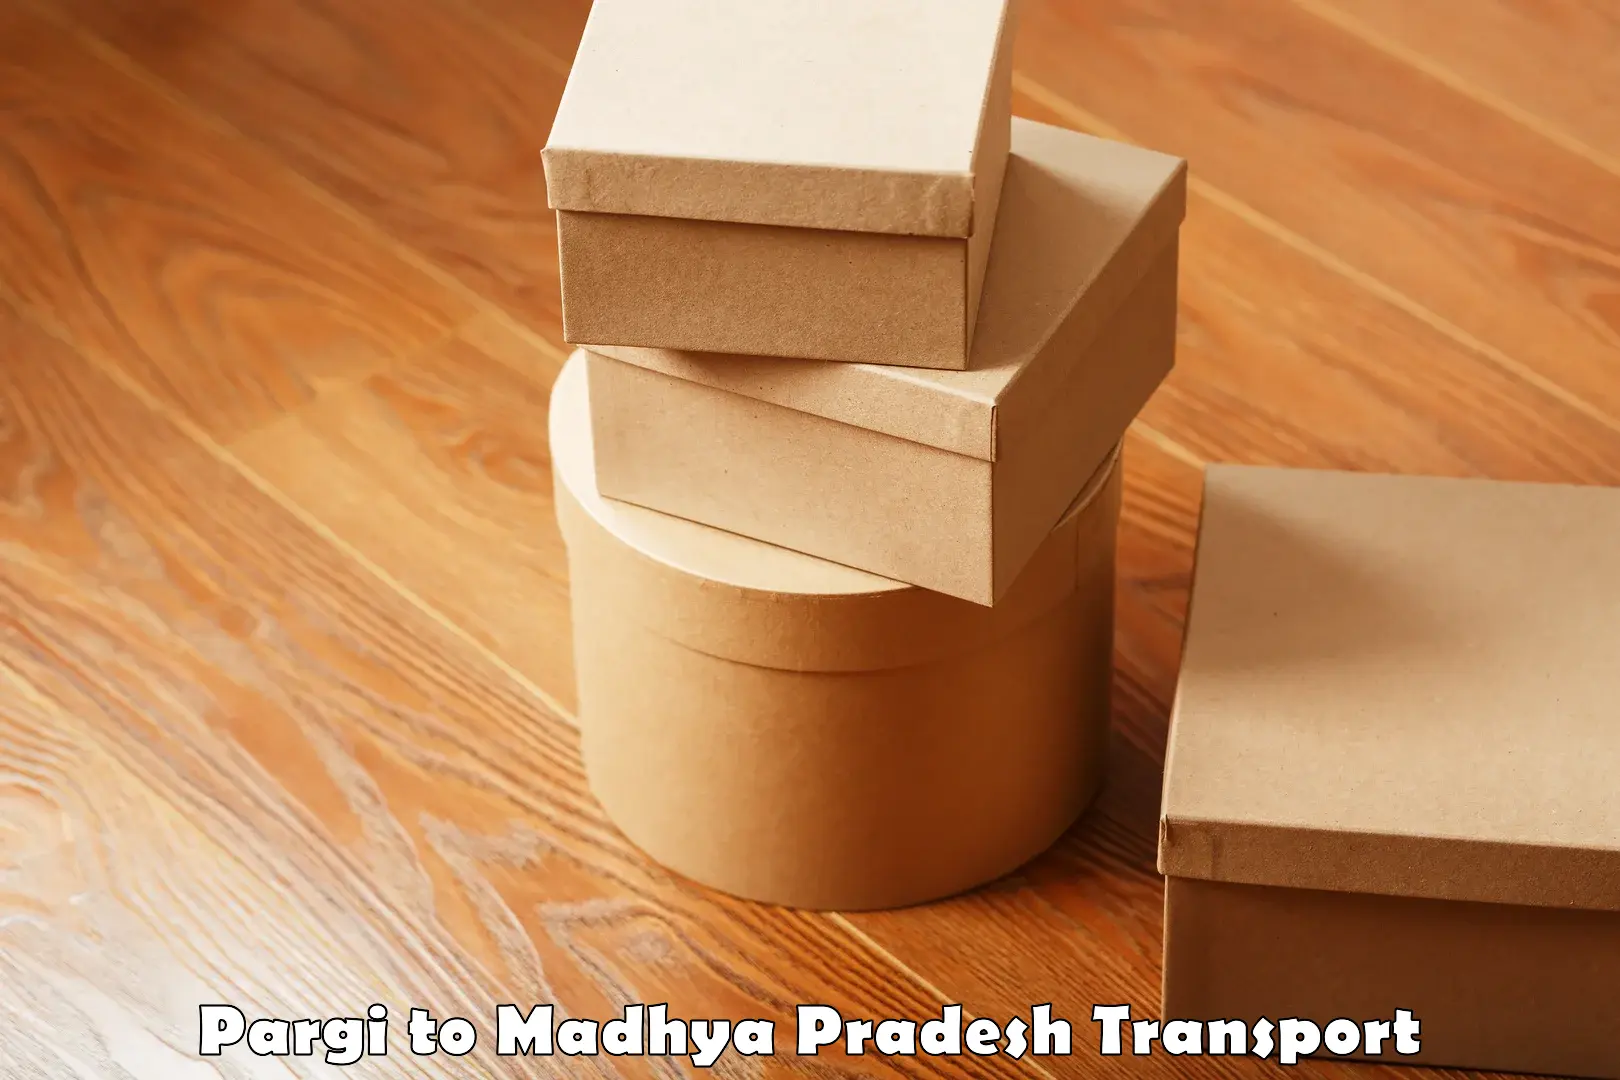 Furniture transport service Pargi to Nainpur